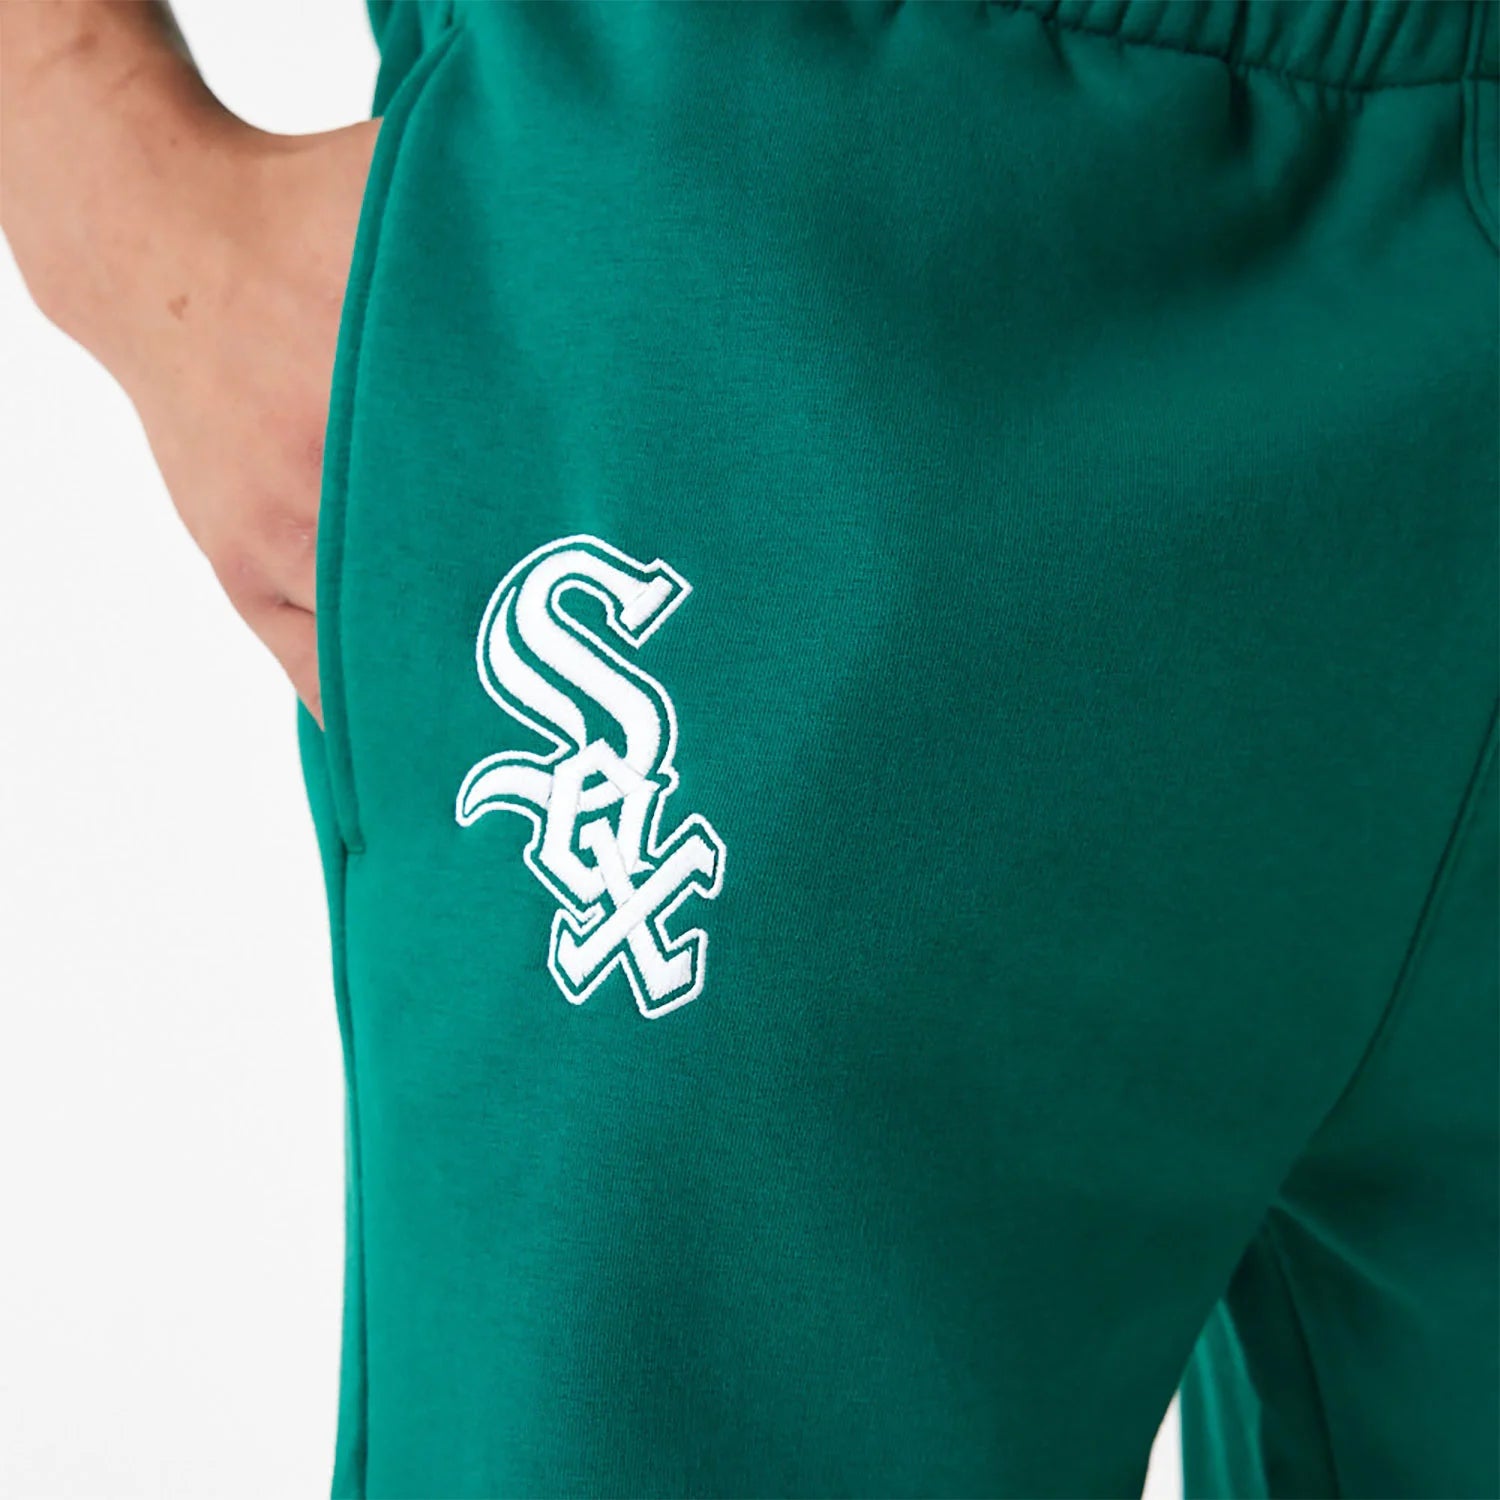 New Era - "Essentials" Chicago White Sox Green Pants